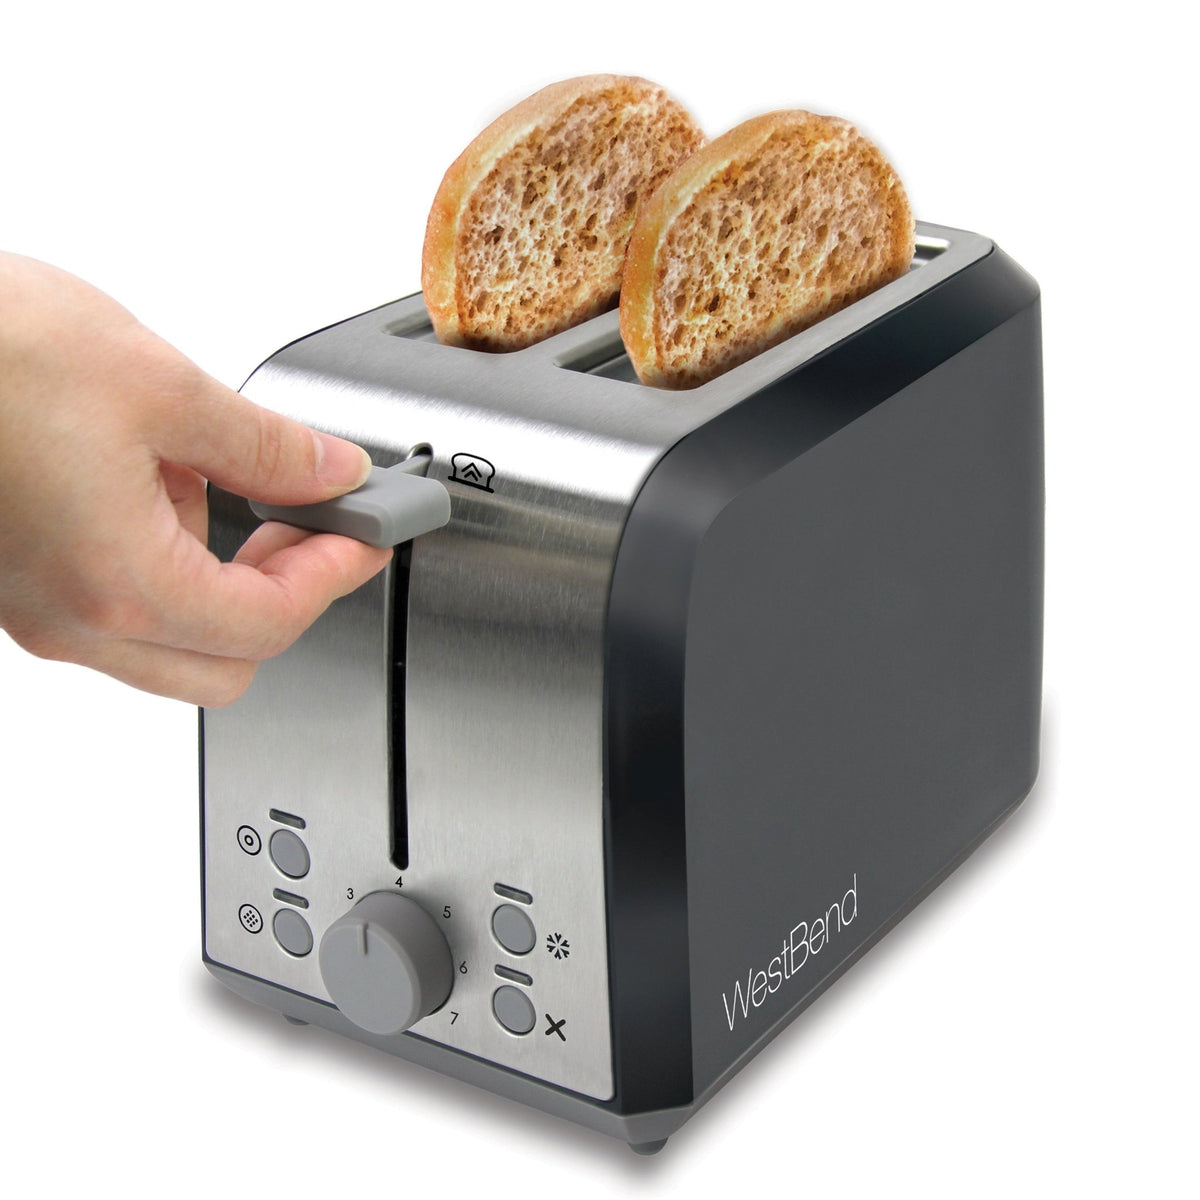 Westbend 2 Slice Toaster - White, 1 ct - Kroger